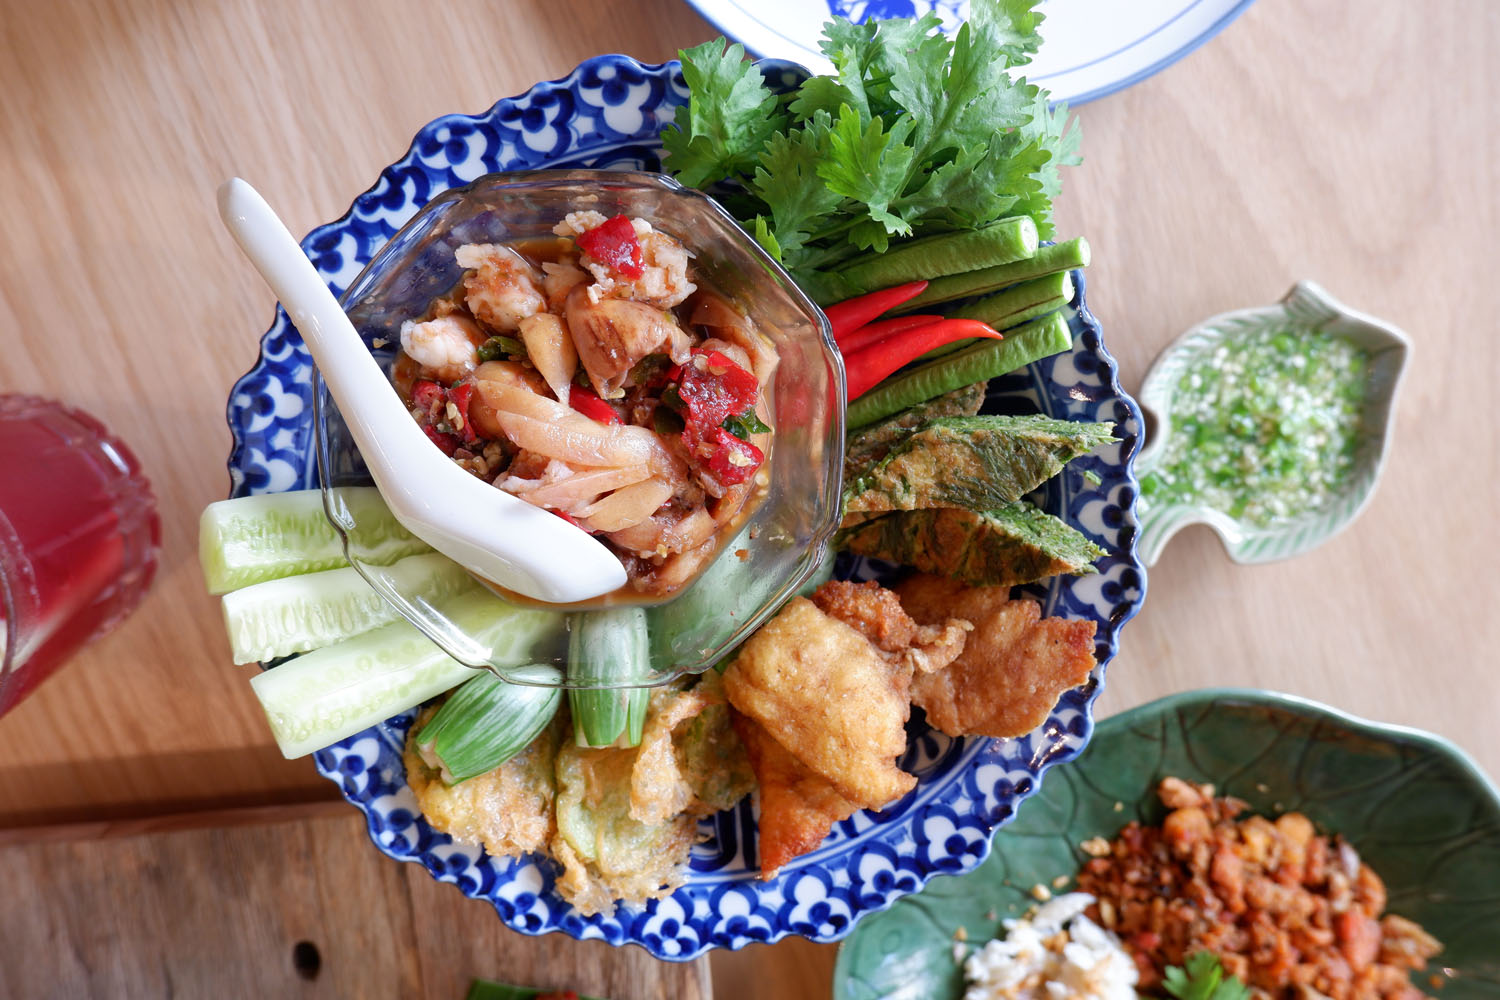 Salak and Shrimp Chili Dip with Deep Fried Nue-Aon Fish (340 baht).